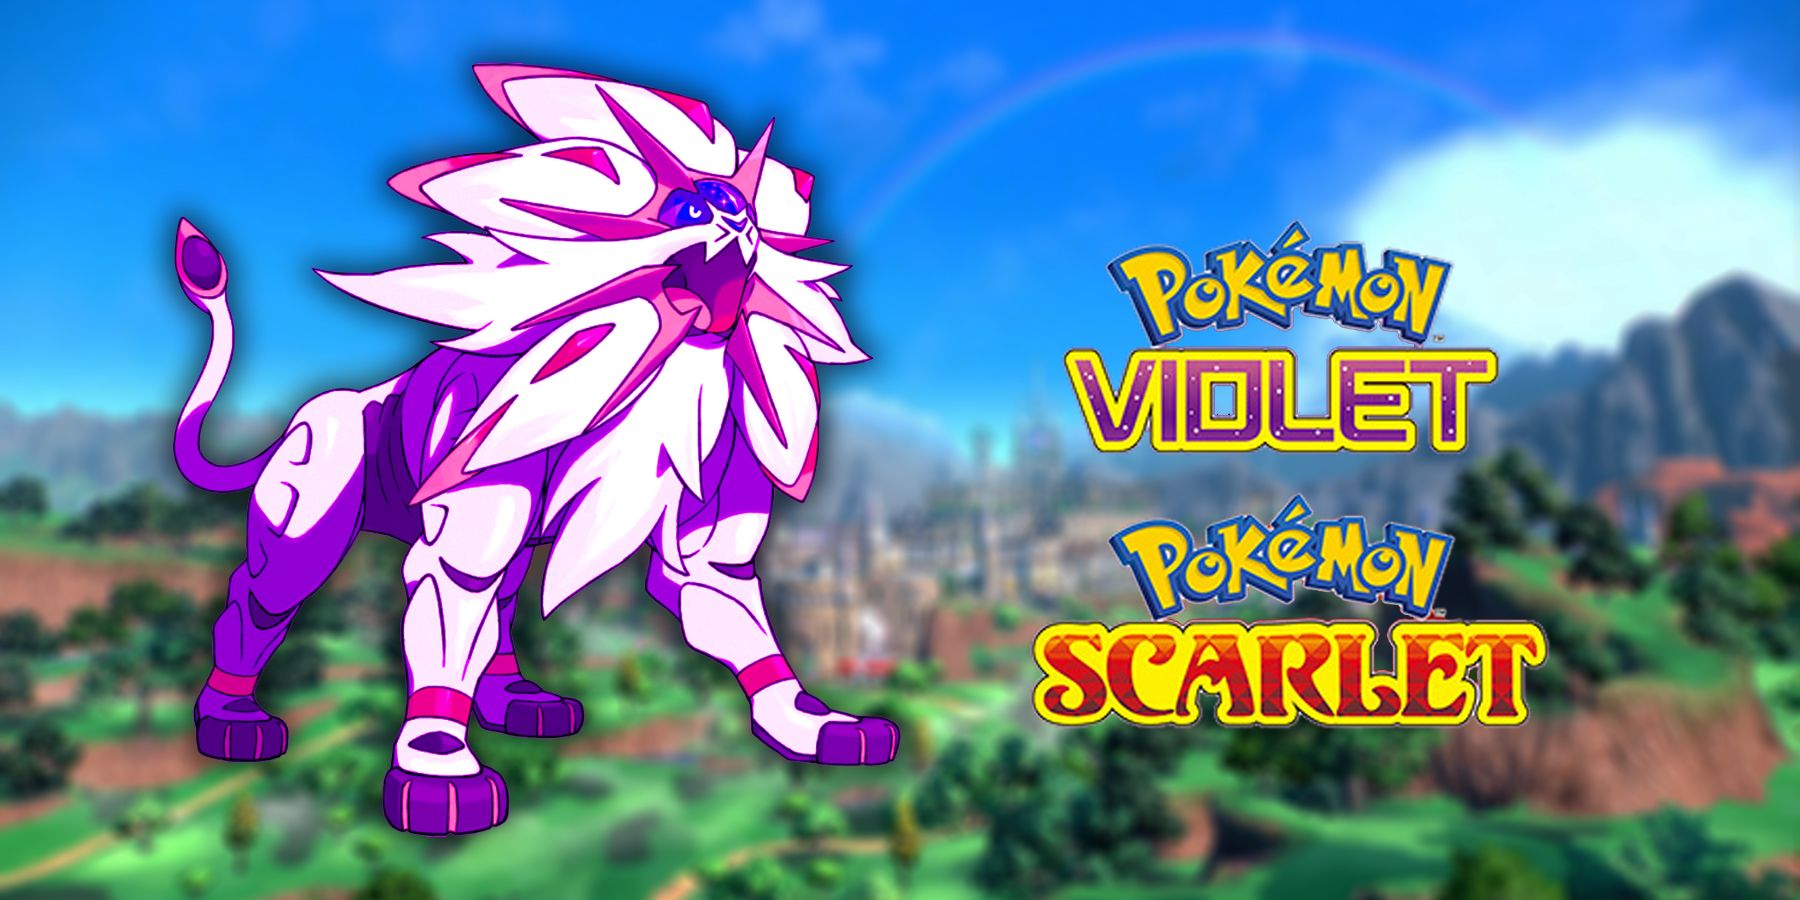 All Pokemon Scarlet and Violet Legendary Pokemon